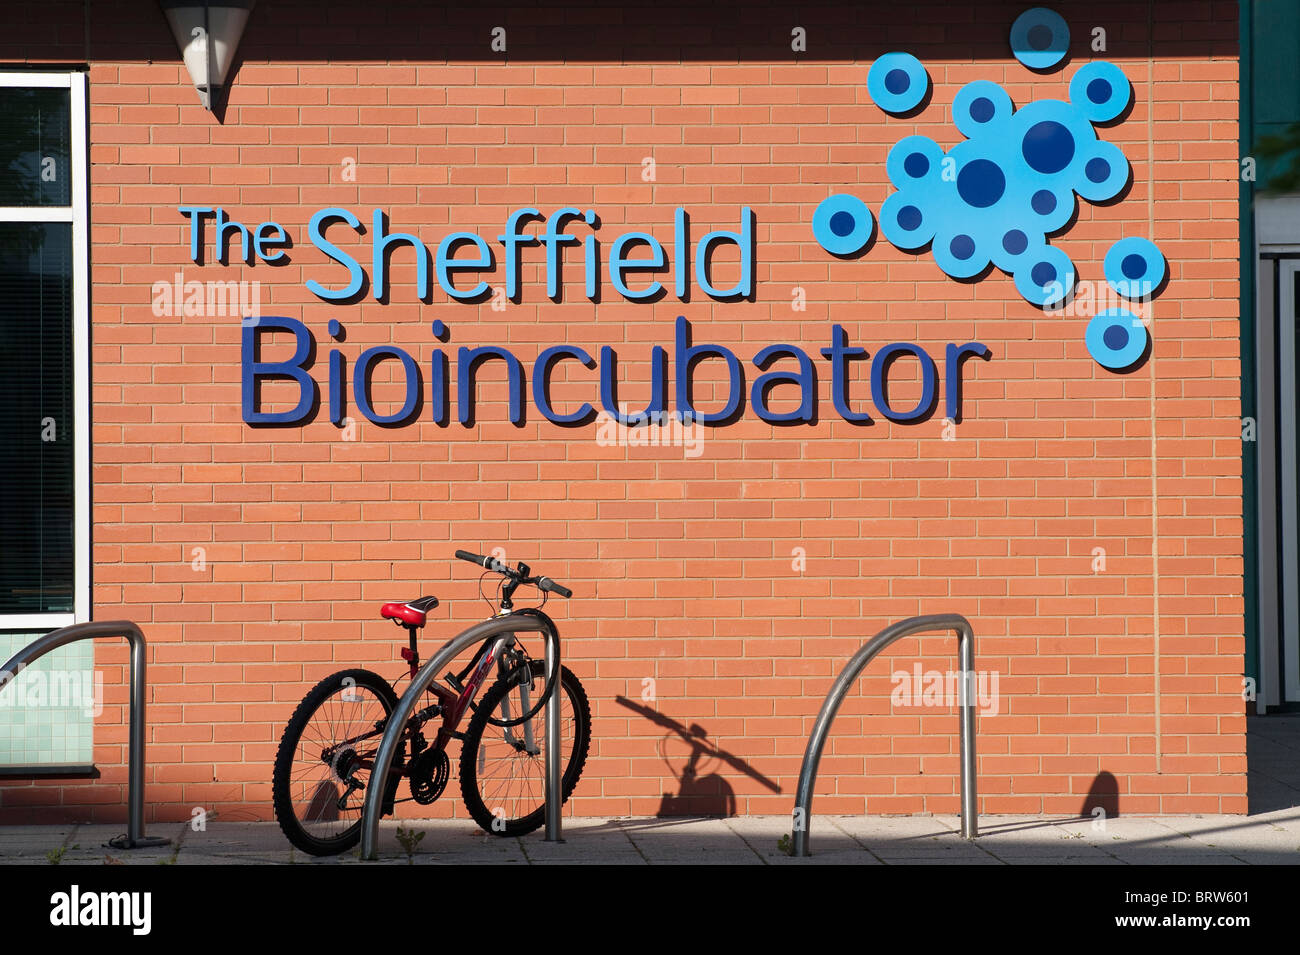 The Sheffield Bioincubator Stock Photo